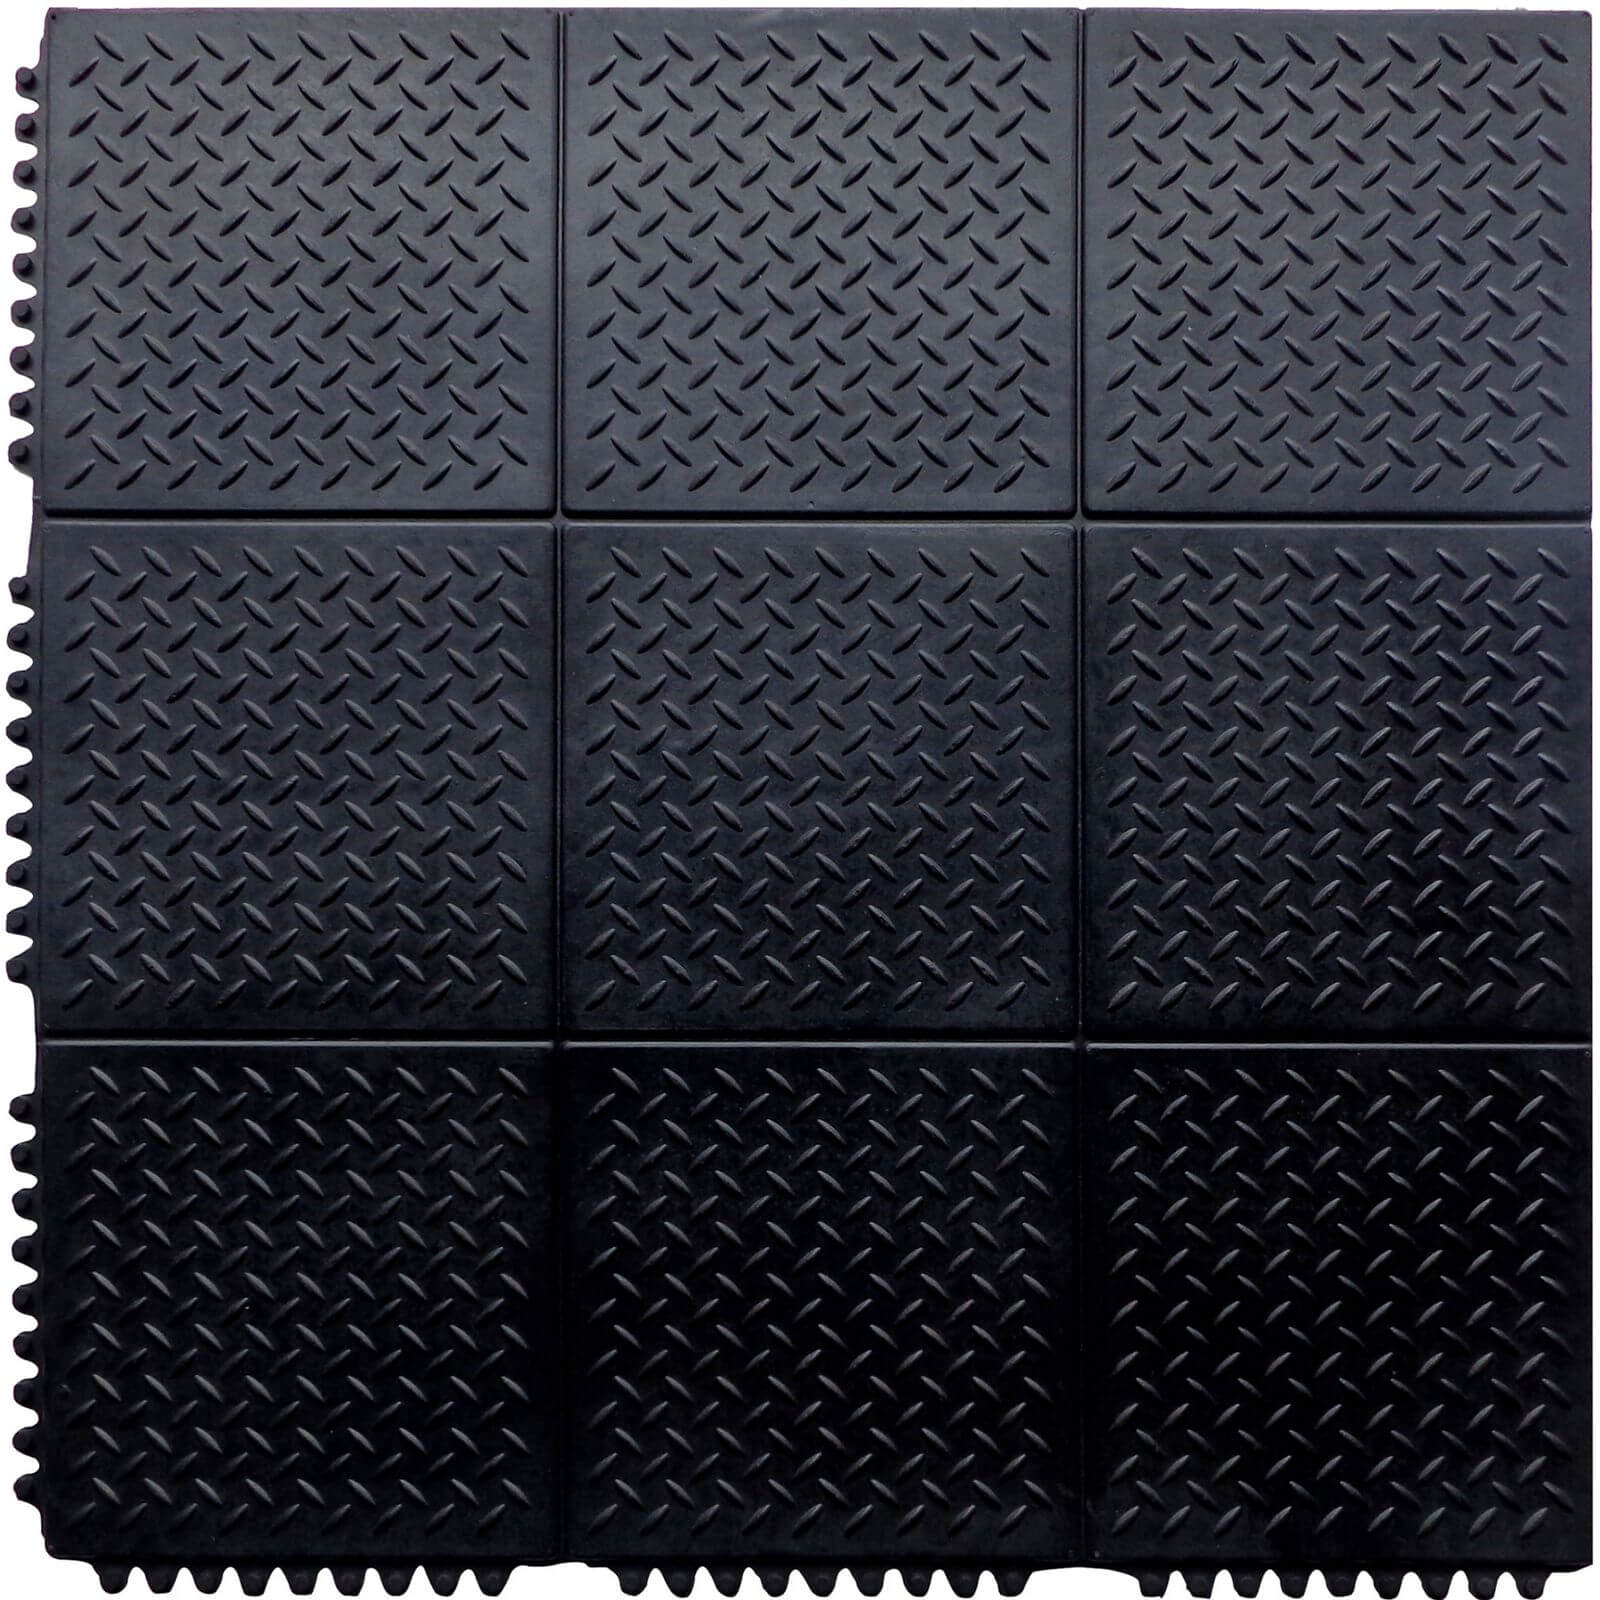 Photo of Interlocking Rubber Checker Plate Floor Mat - Black - 90x90cm